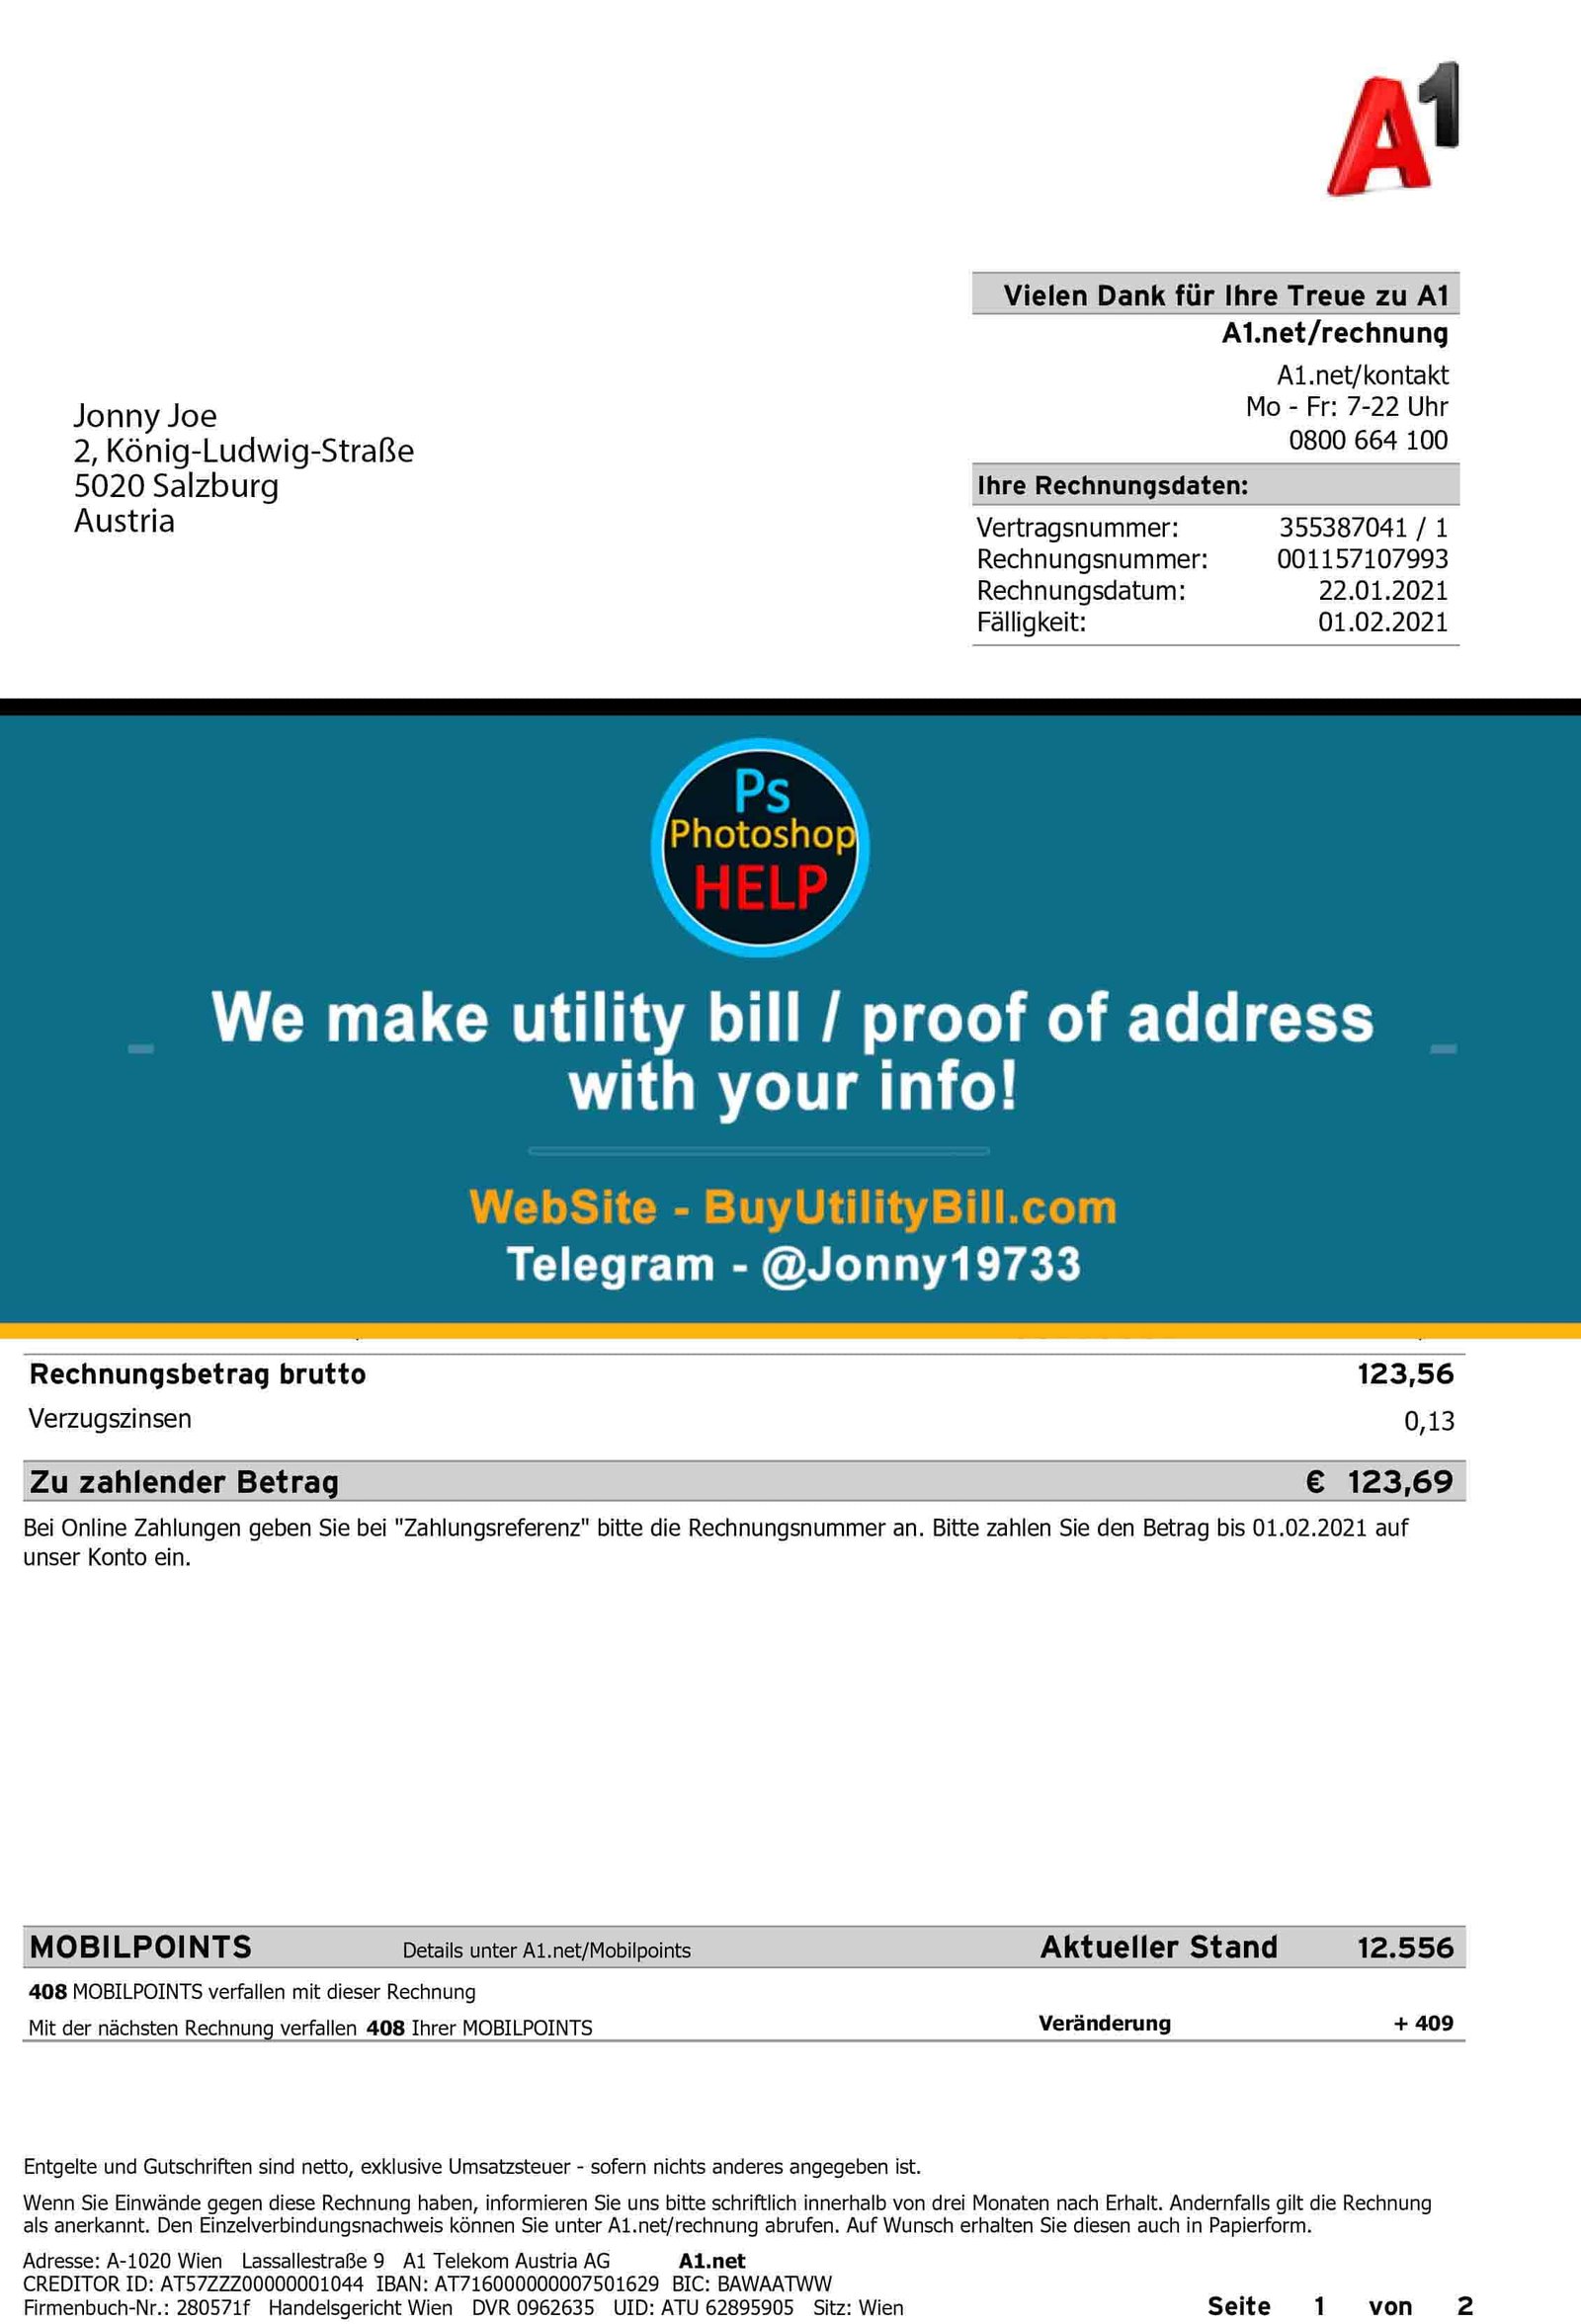 Austria A1 Internet,TV,Mobile bill Fake Utility bill